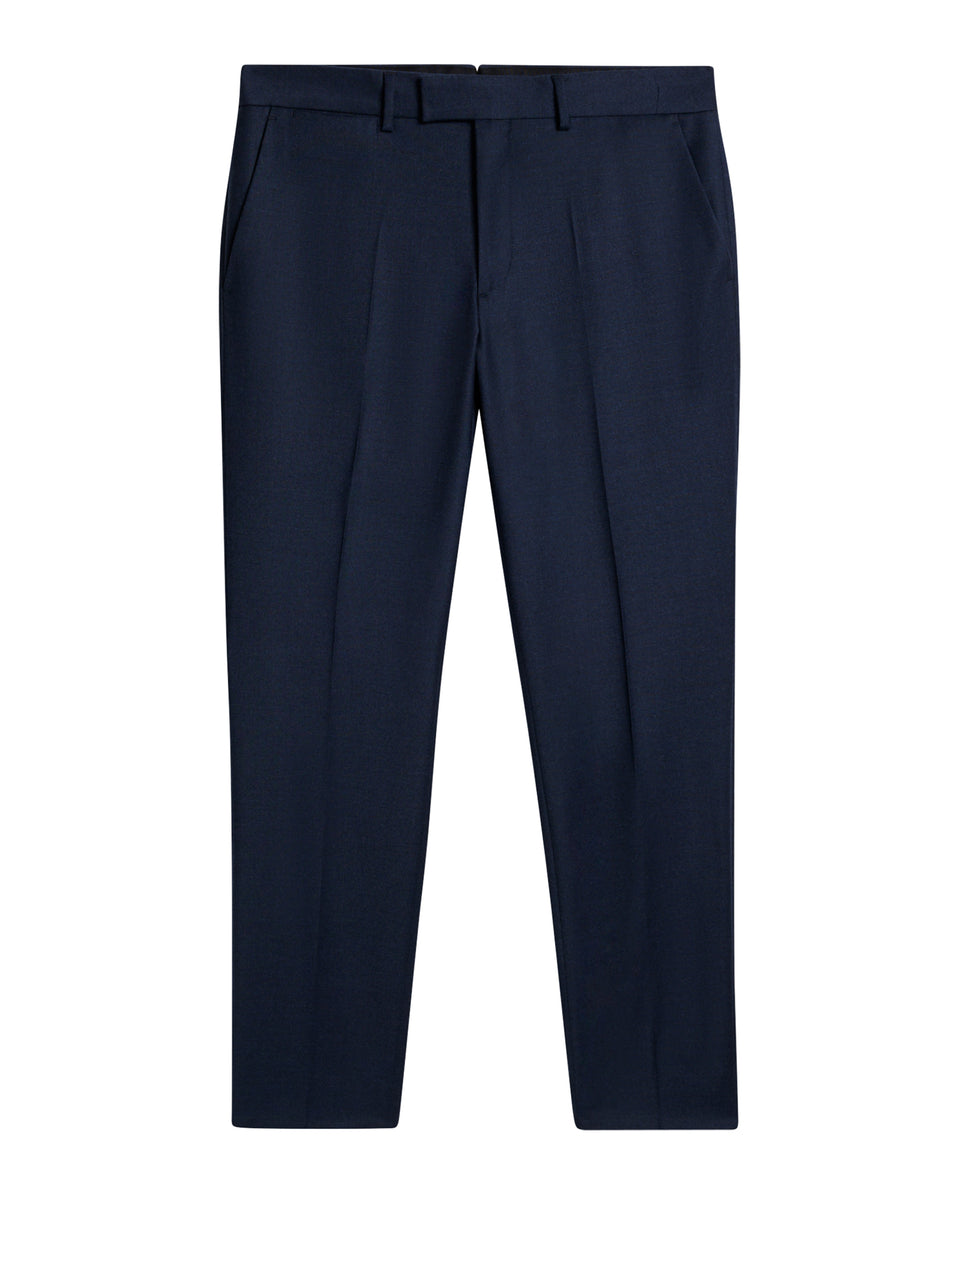 Grant Str Flannel Pants / JL Navy